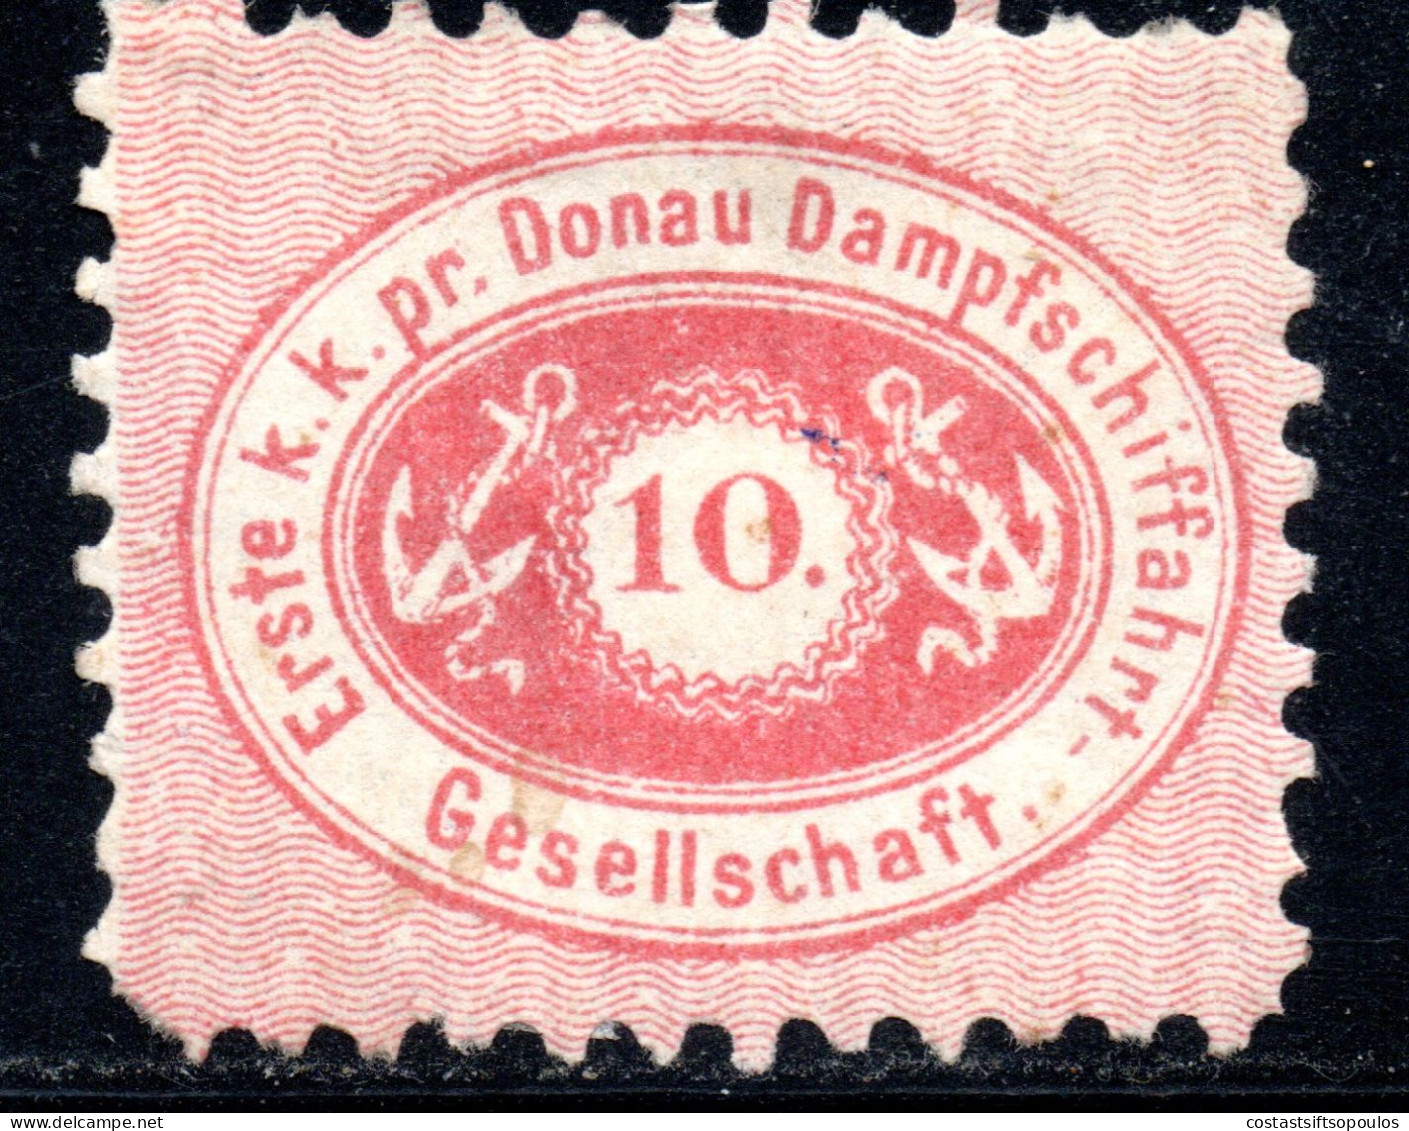 2462. AUSTRIA 1870 DDSG 10 KR. #4 PART GUM. SIGNED - Compagnia Di Navigazione A Vapore Del Danubio (DDSG)